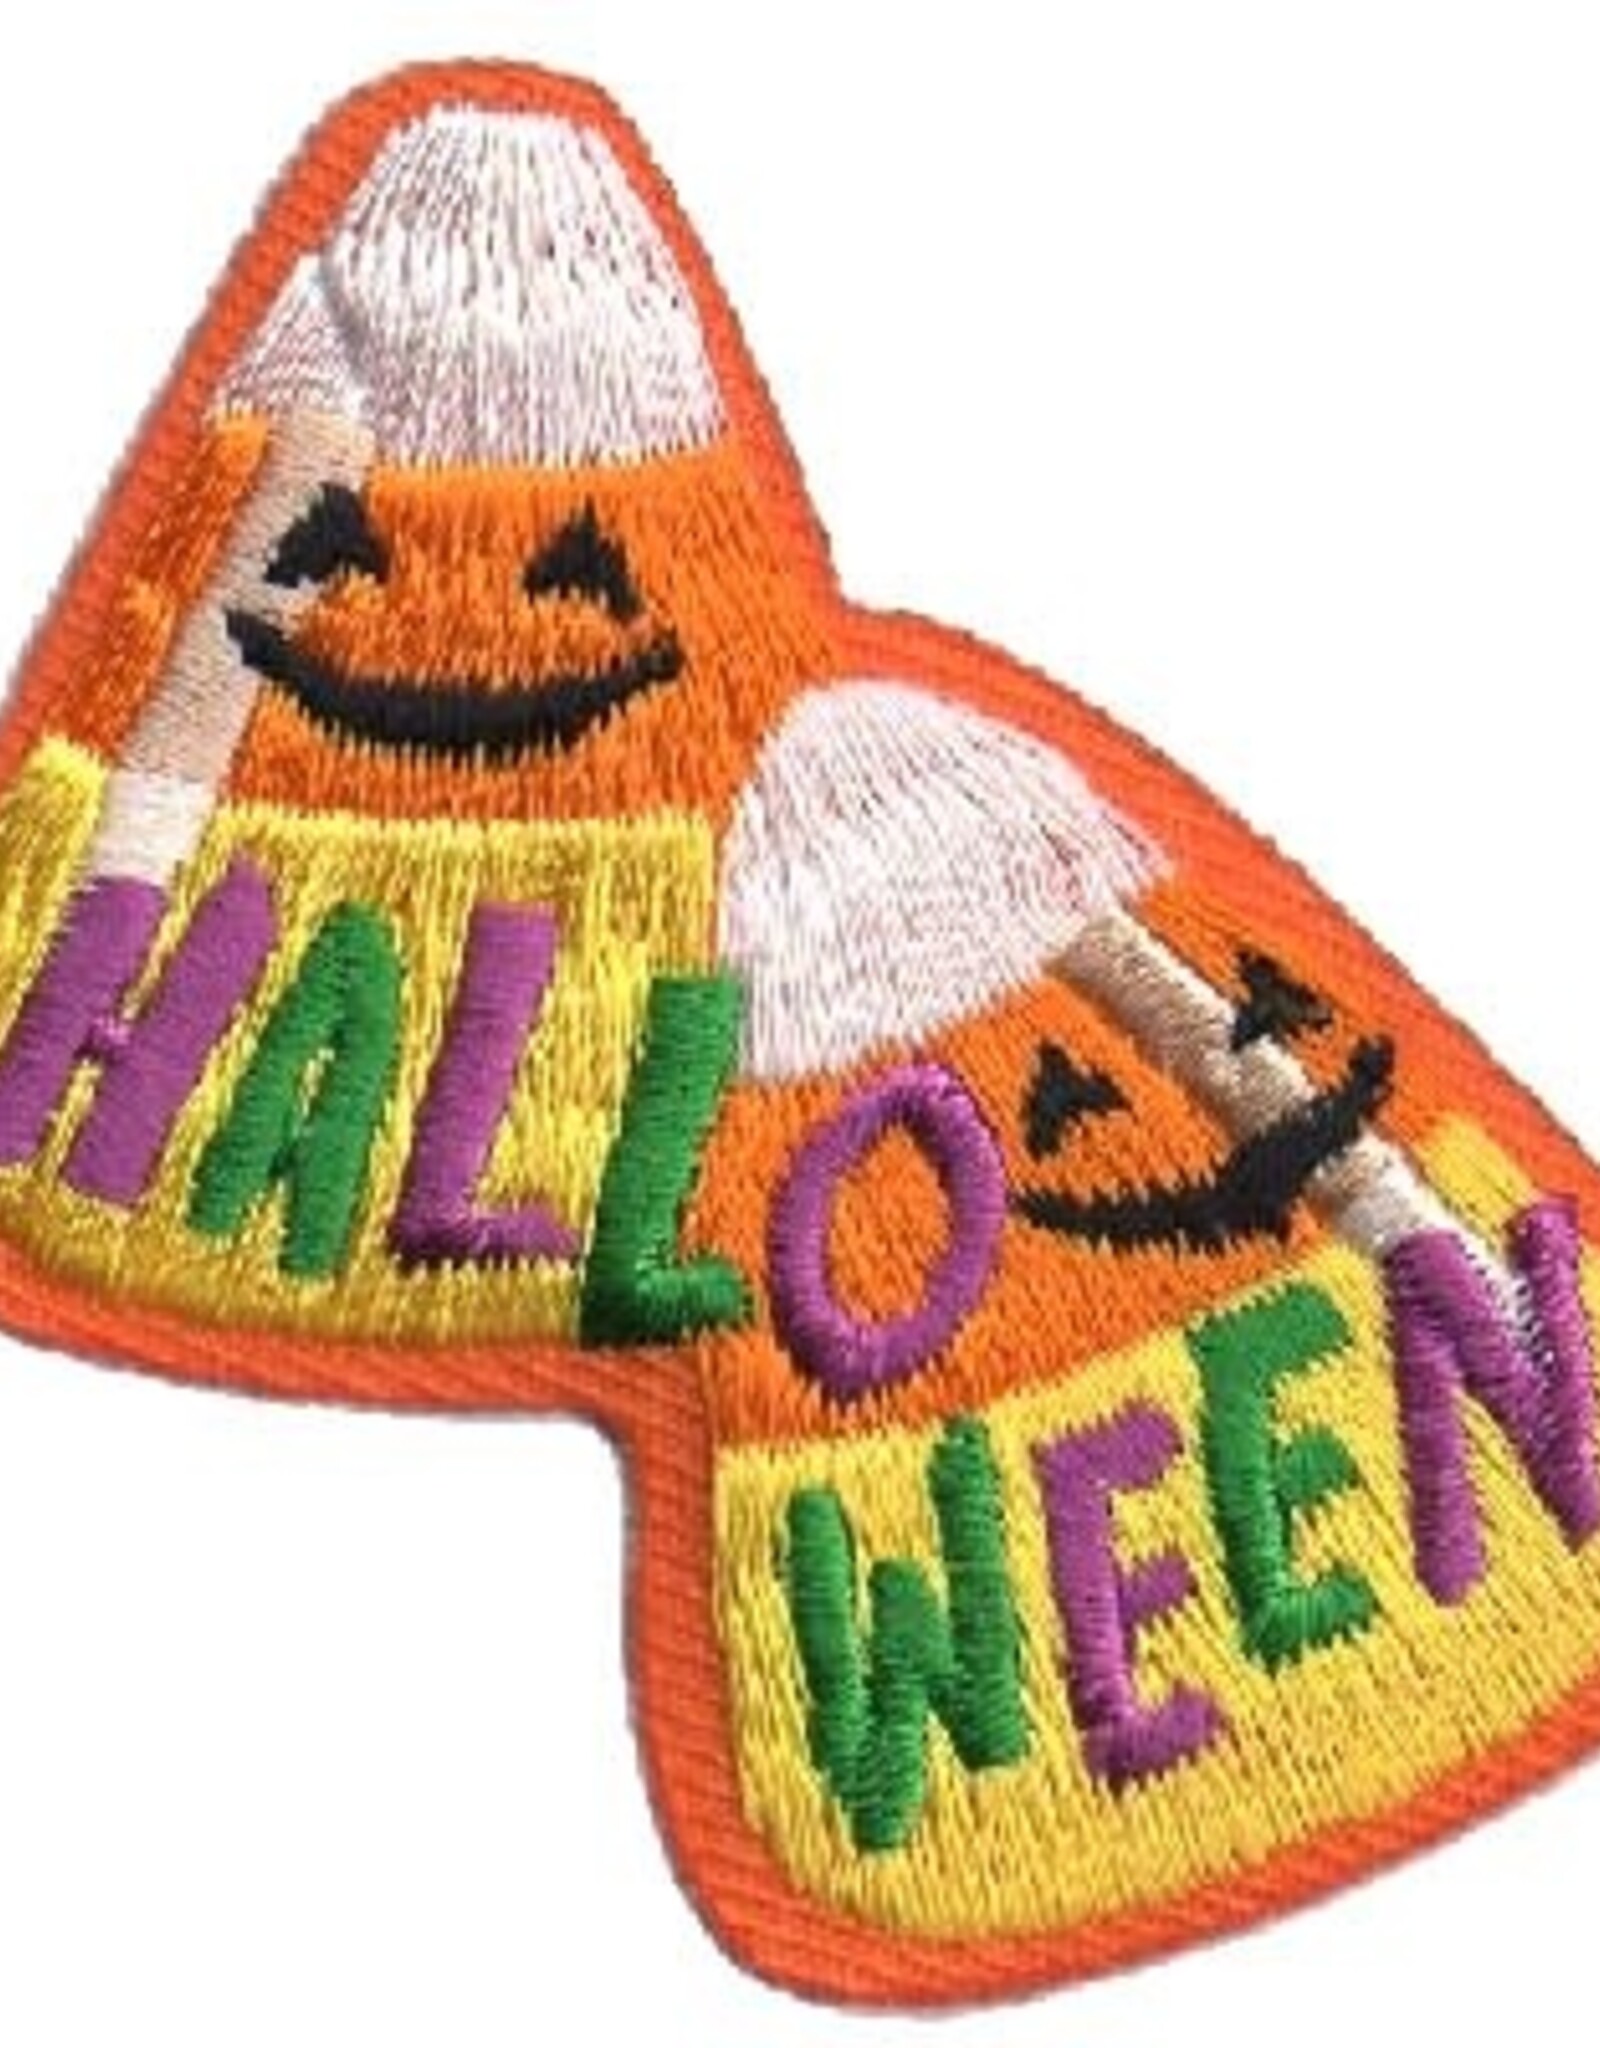 Halloween (Candy Corn) Fun Patch